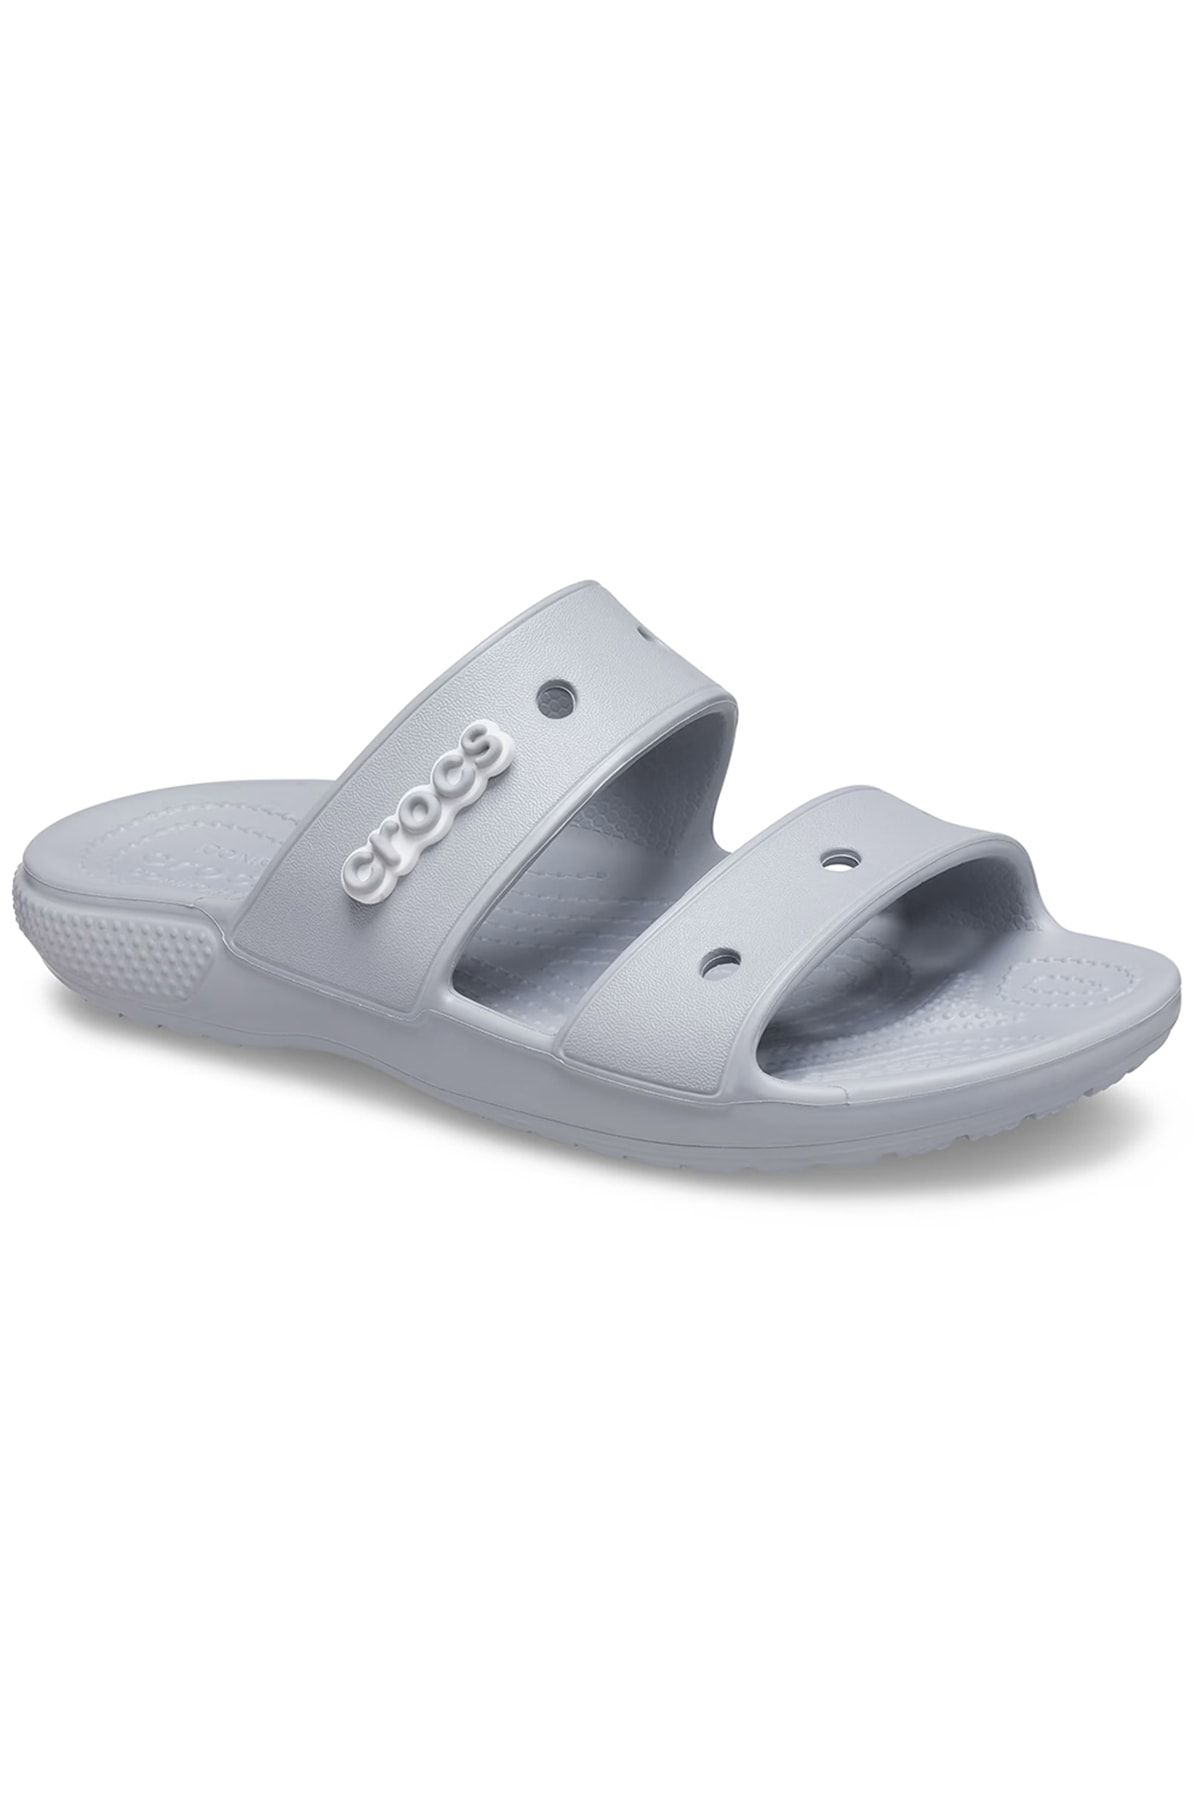 Crocs 206761-007 Classic Sandal Terlik